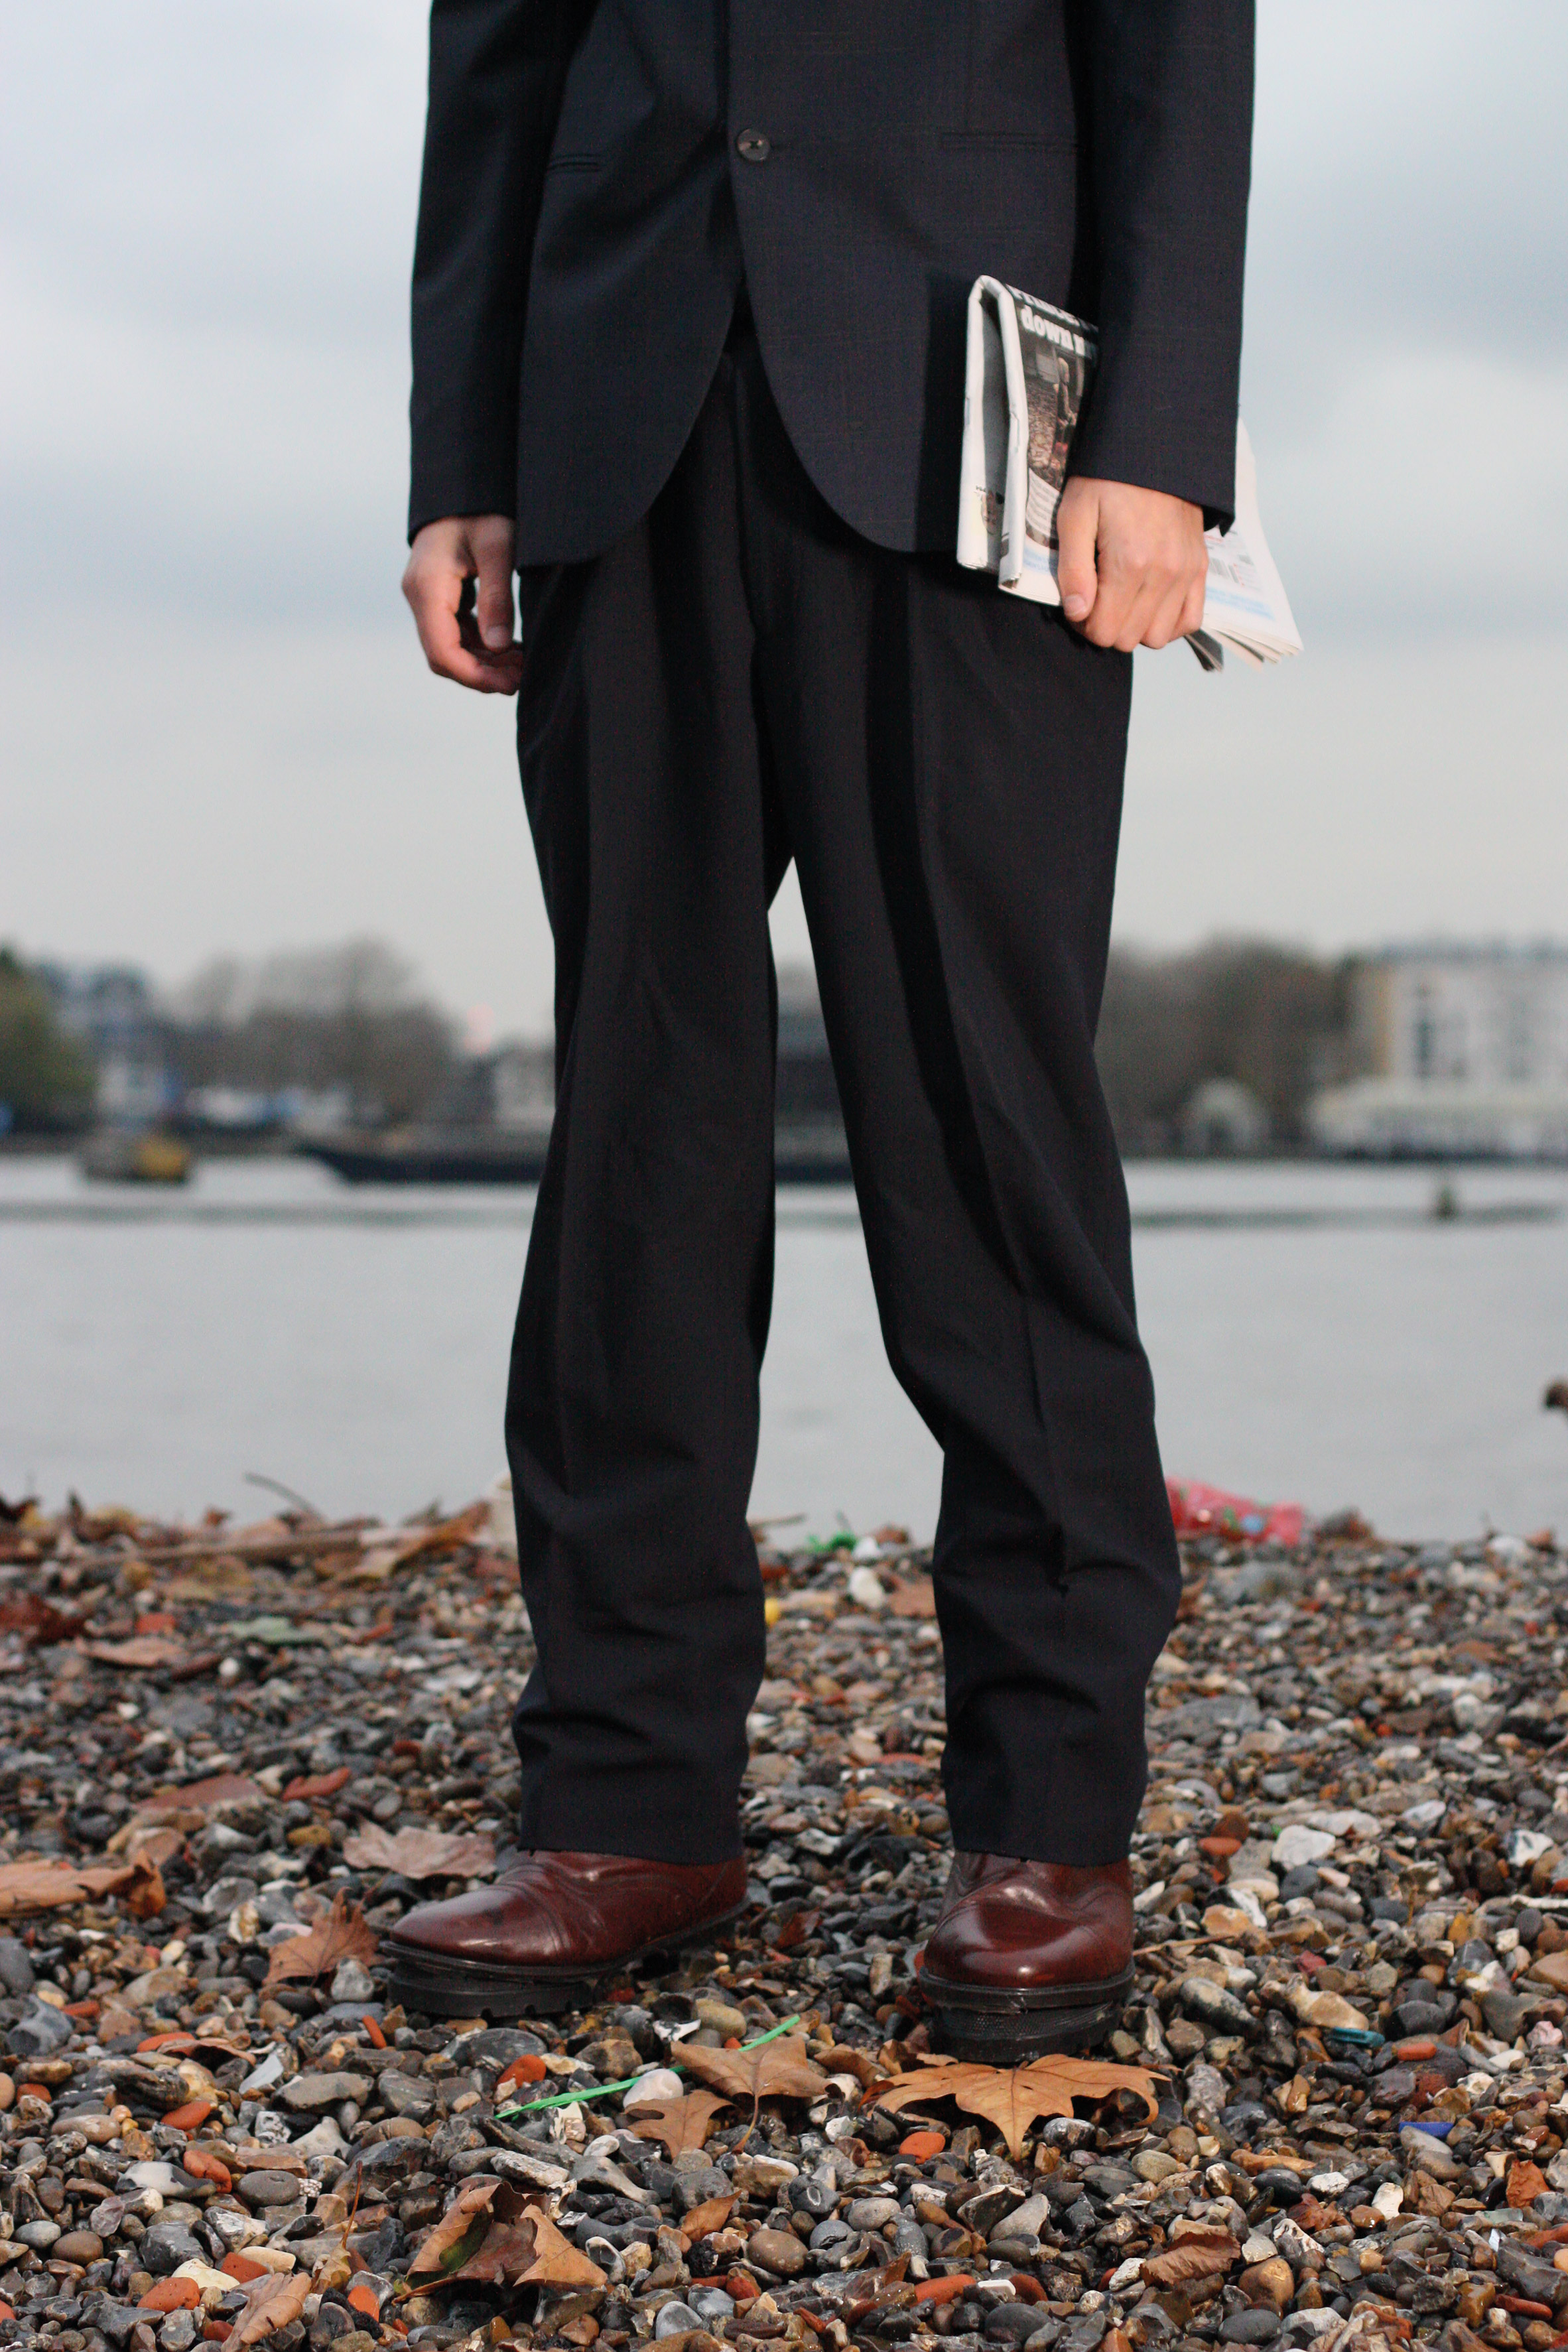 Nicholas Bennett designs flood-proof commuter suit for rising sea levels